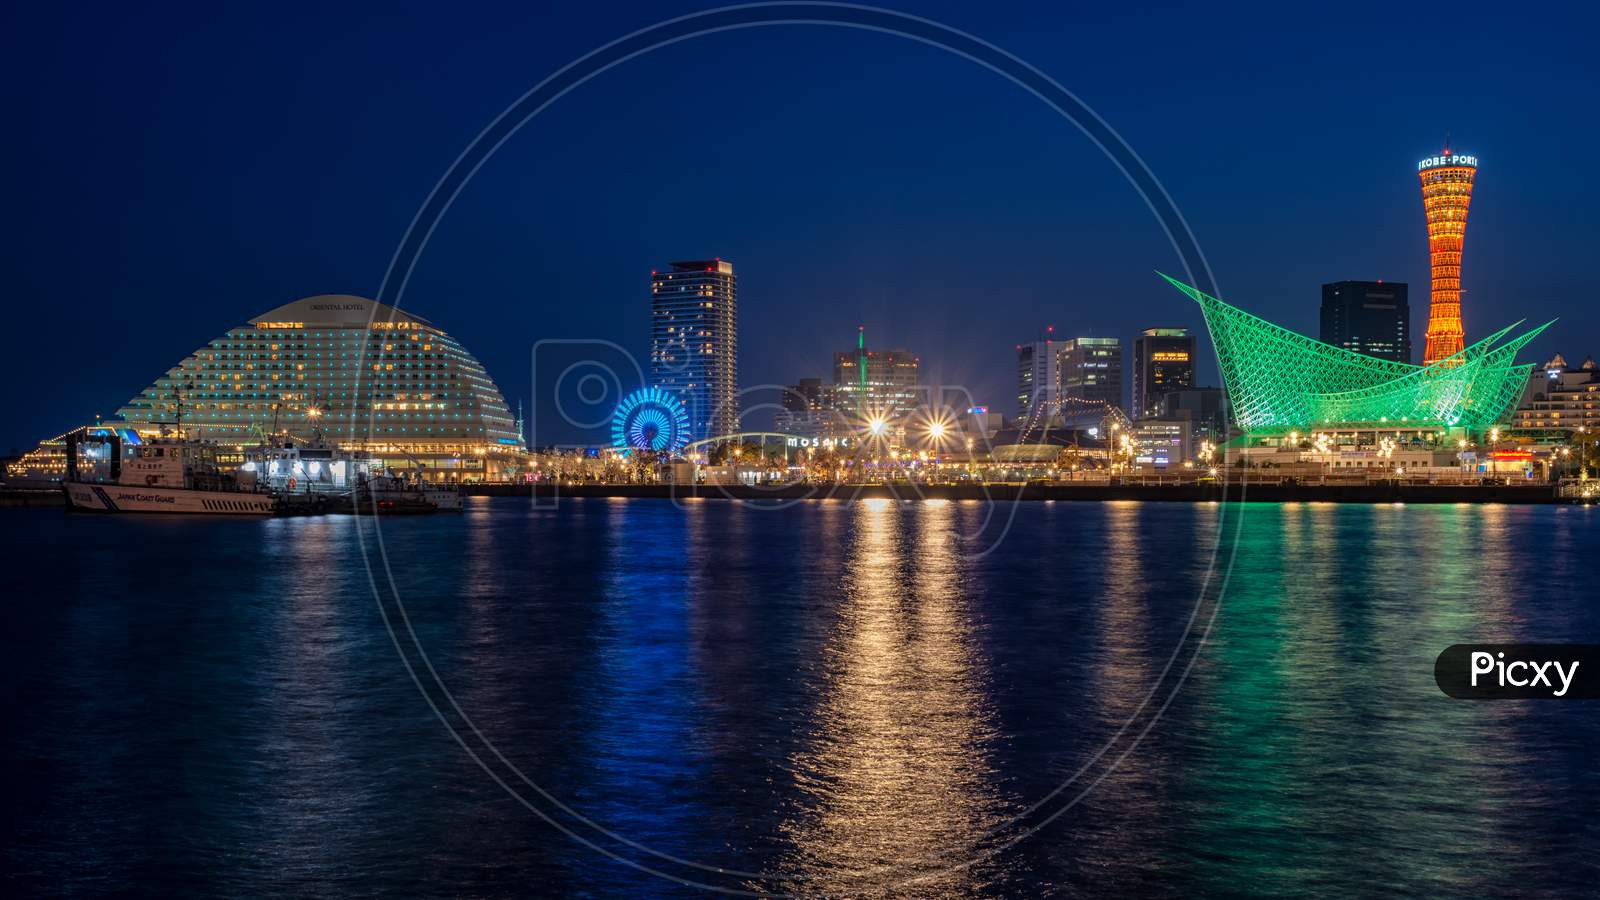 Iconic Night View Of Kobe Port Waterfront, With Kobe Tower And Meriken Park In Kobe, Japan